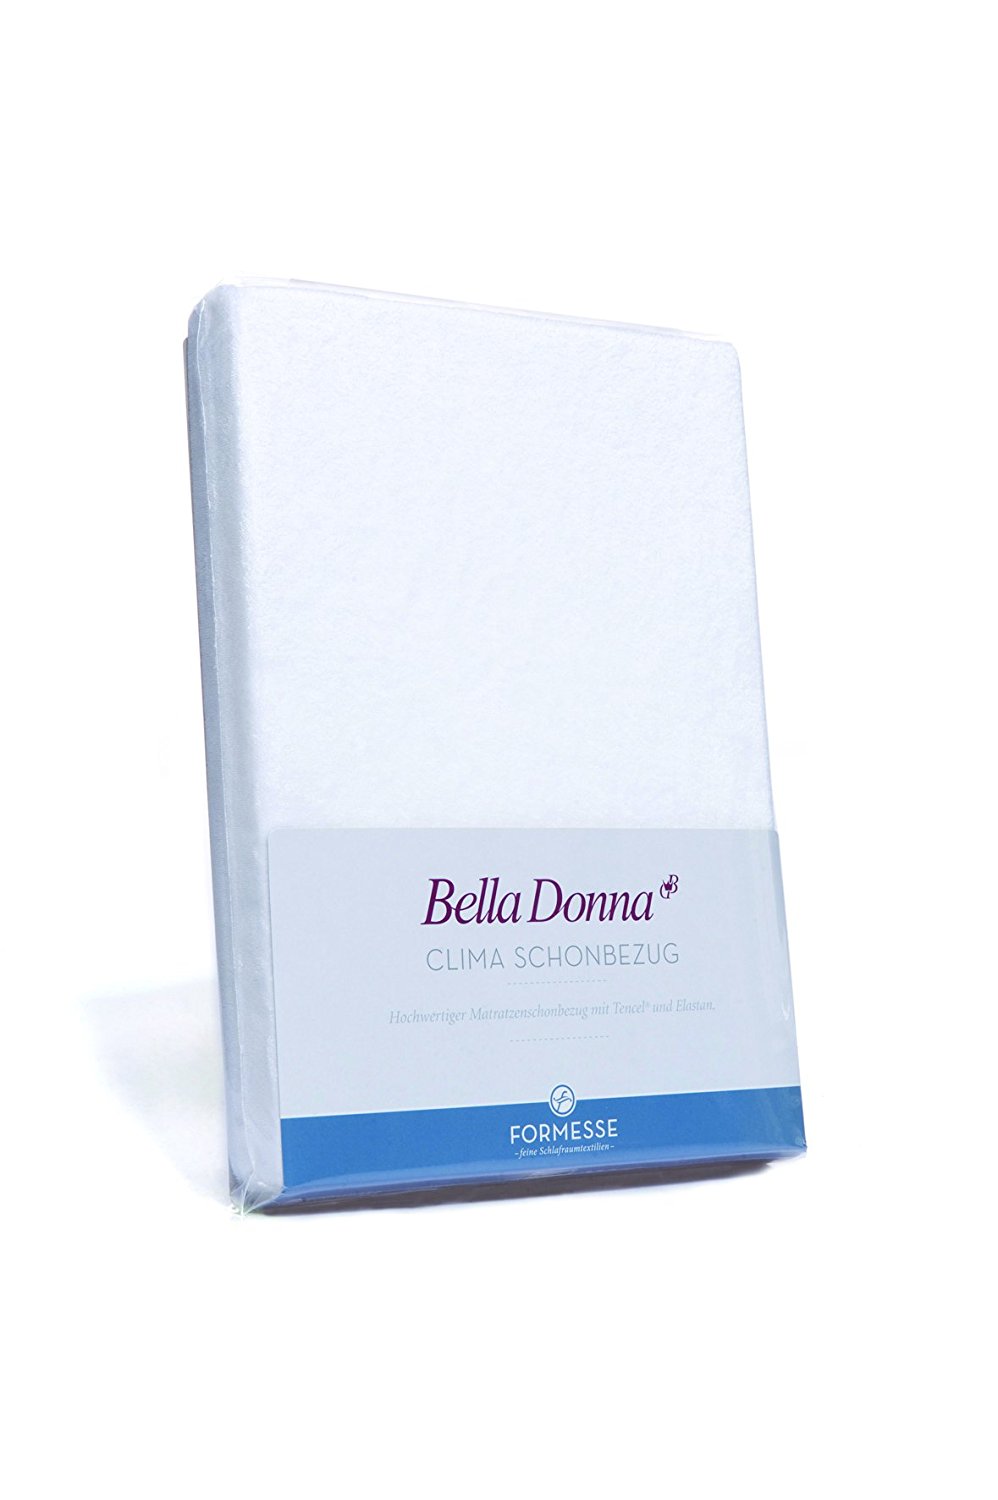 Formesse Bella Donna Clima Schonbezug Matratzenschonbezug 90/190-100/220 cm